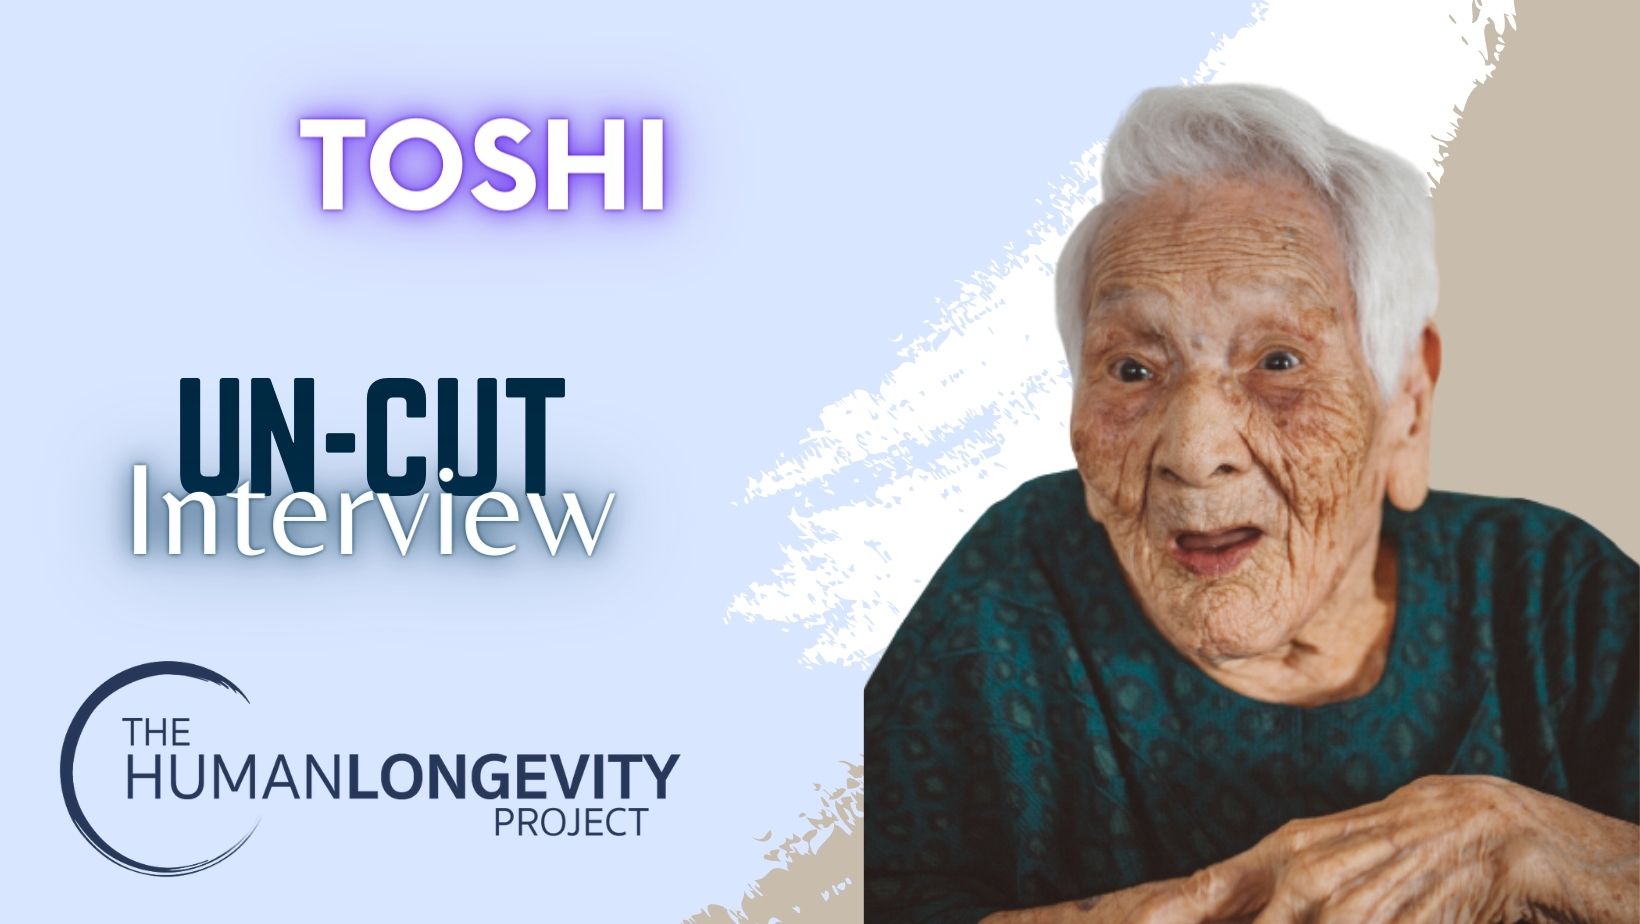 Human Longevity Project Uncut Interview With Toshi Suzuki